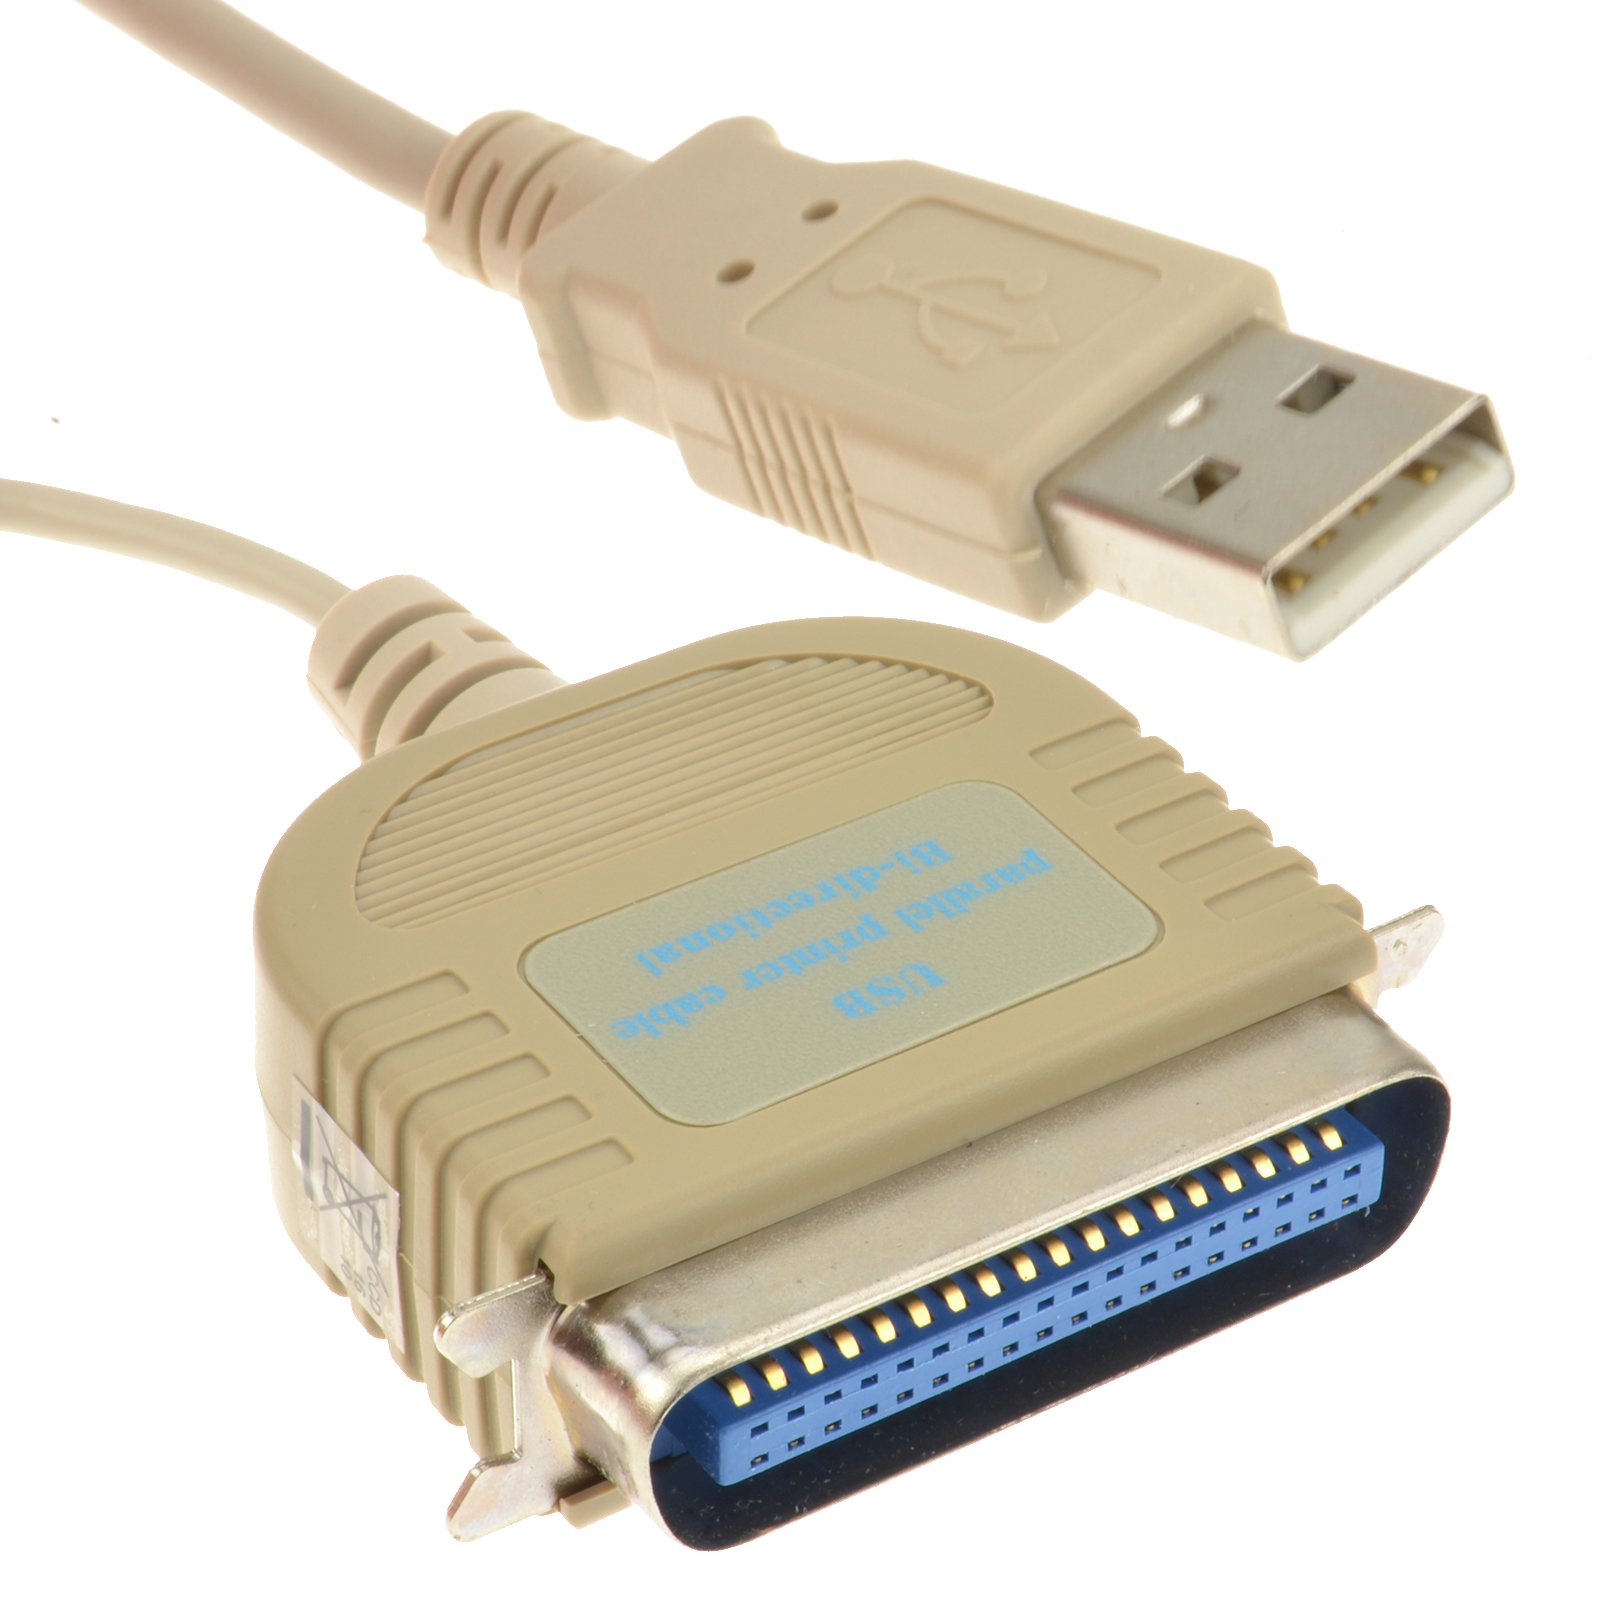 kenable Professionell USB Zum IEEE-1284 Parallel Drucker Kabel Bi-Directional 2 m [2 Meter]